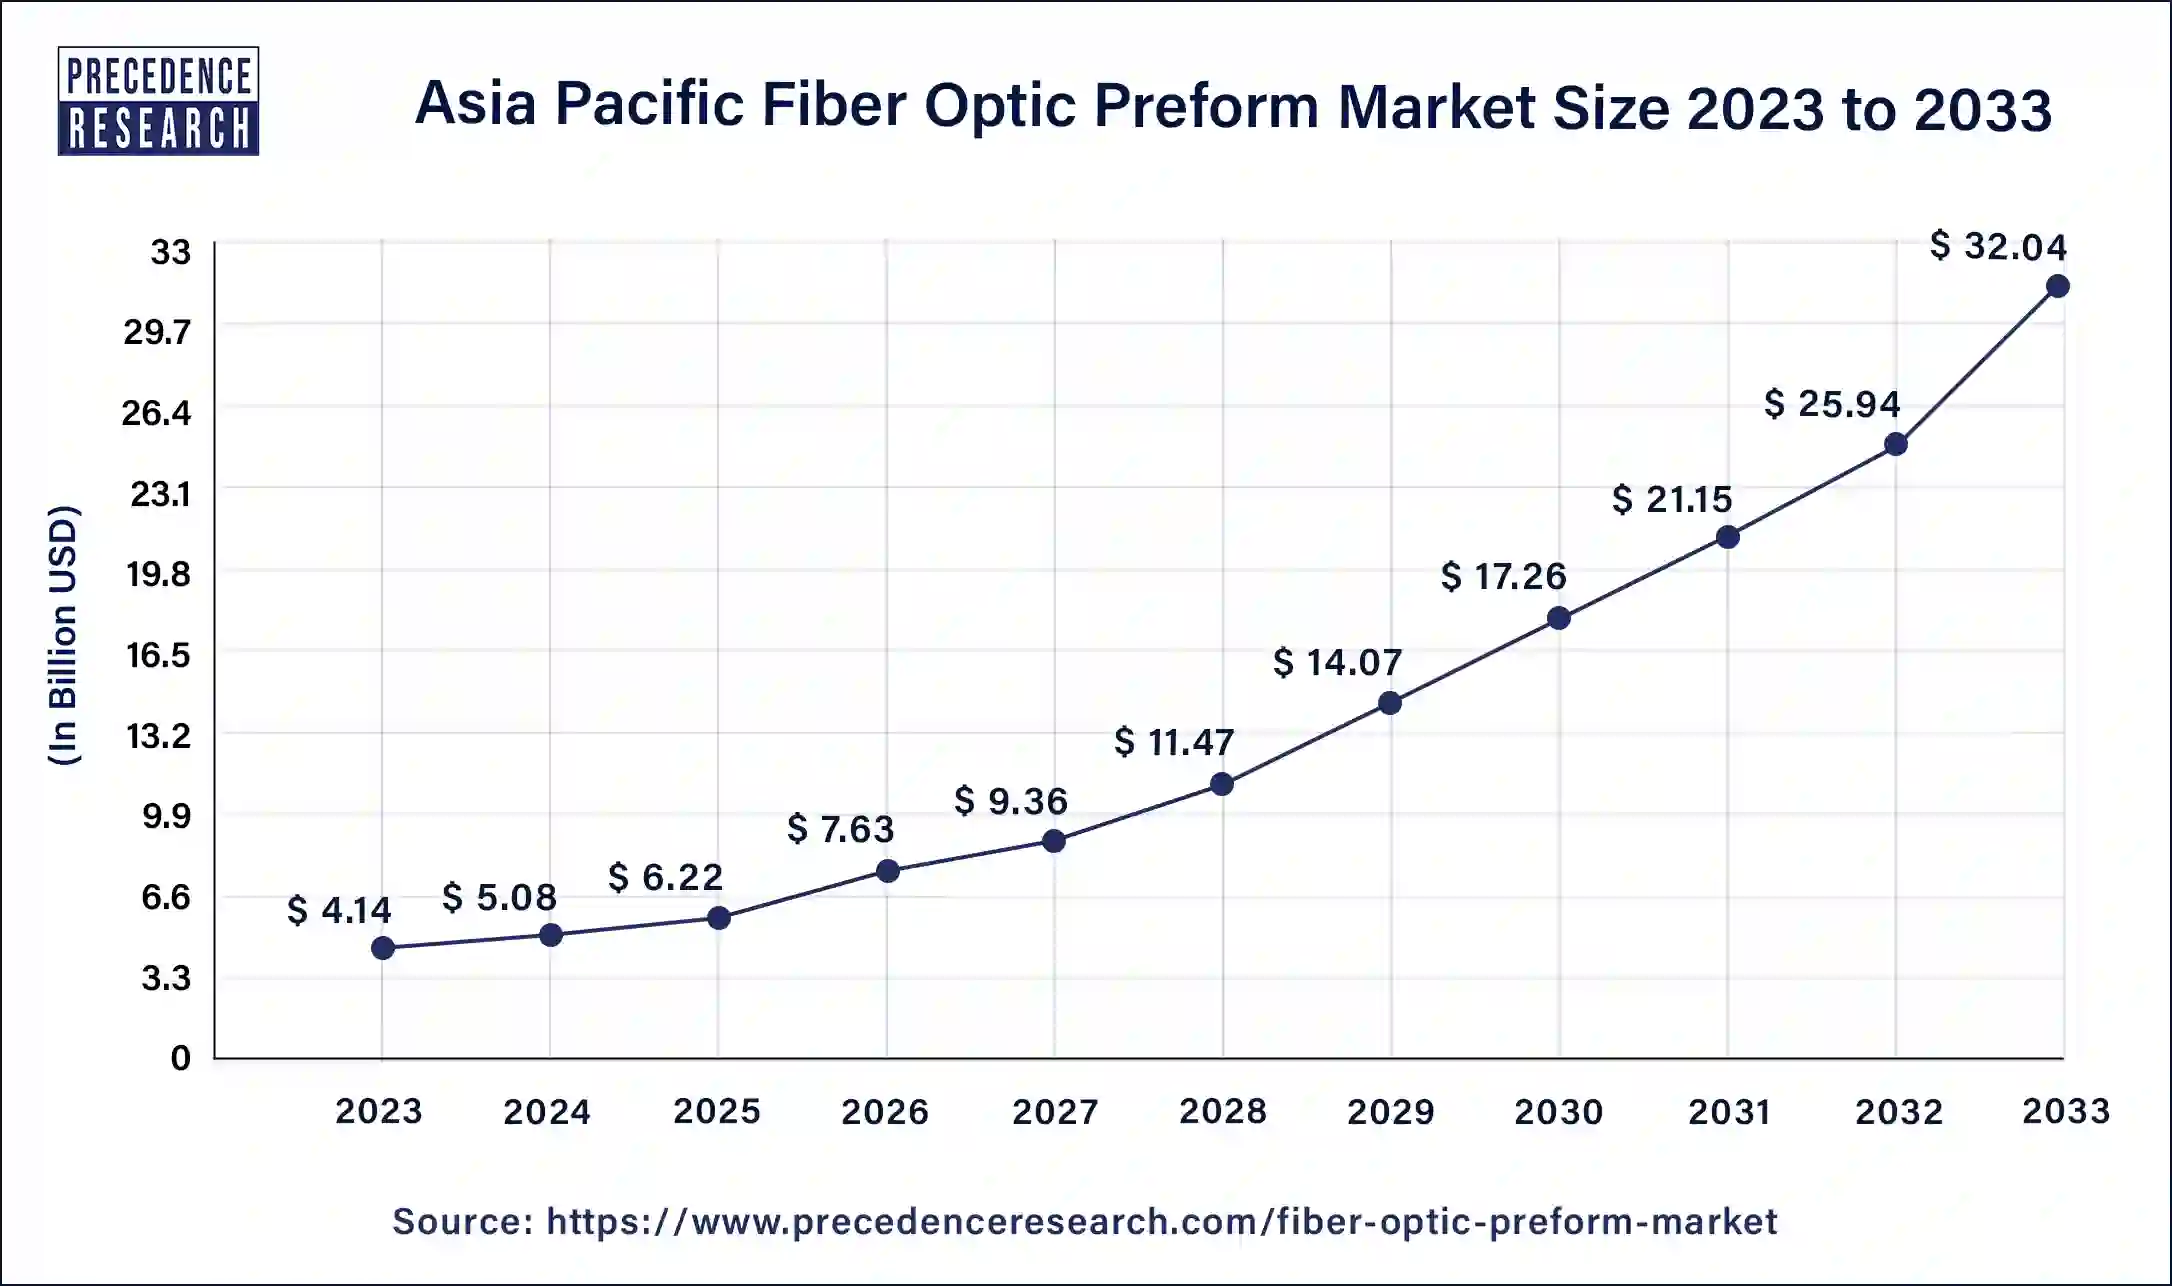 Asia Pacific Fiber Optic Preform Market Size 2024 to 2033